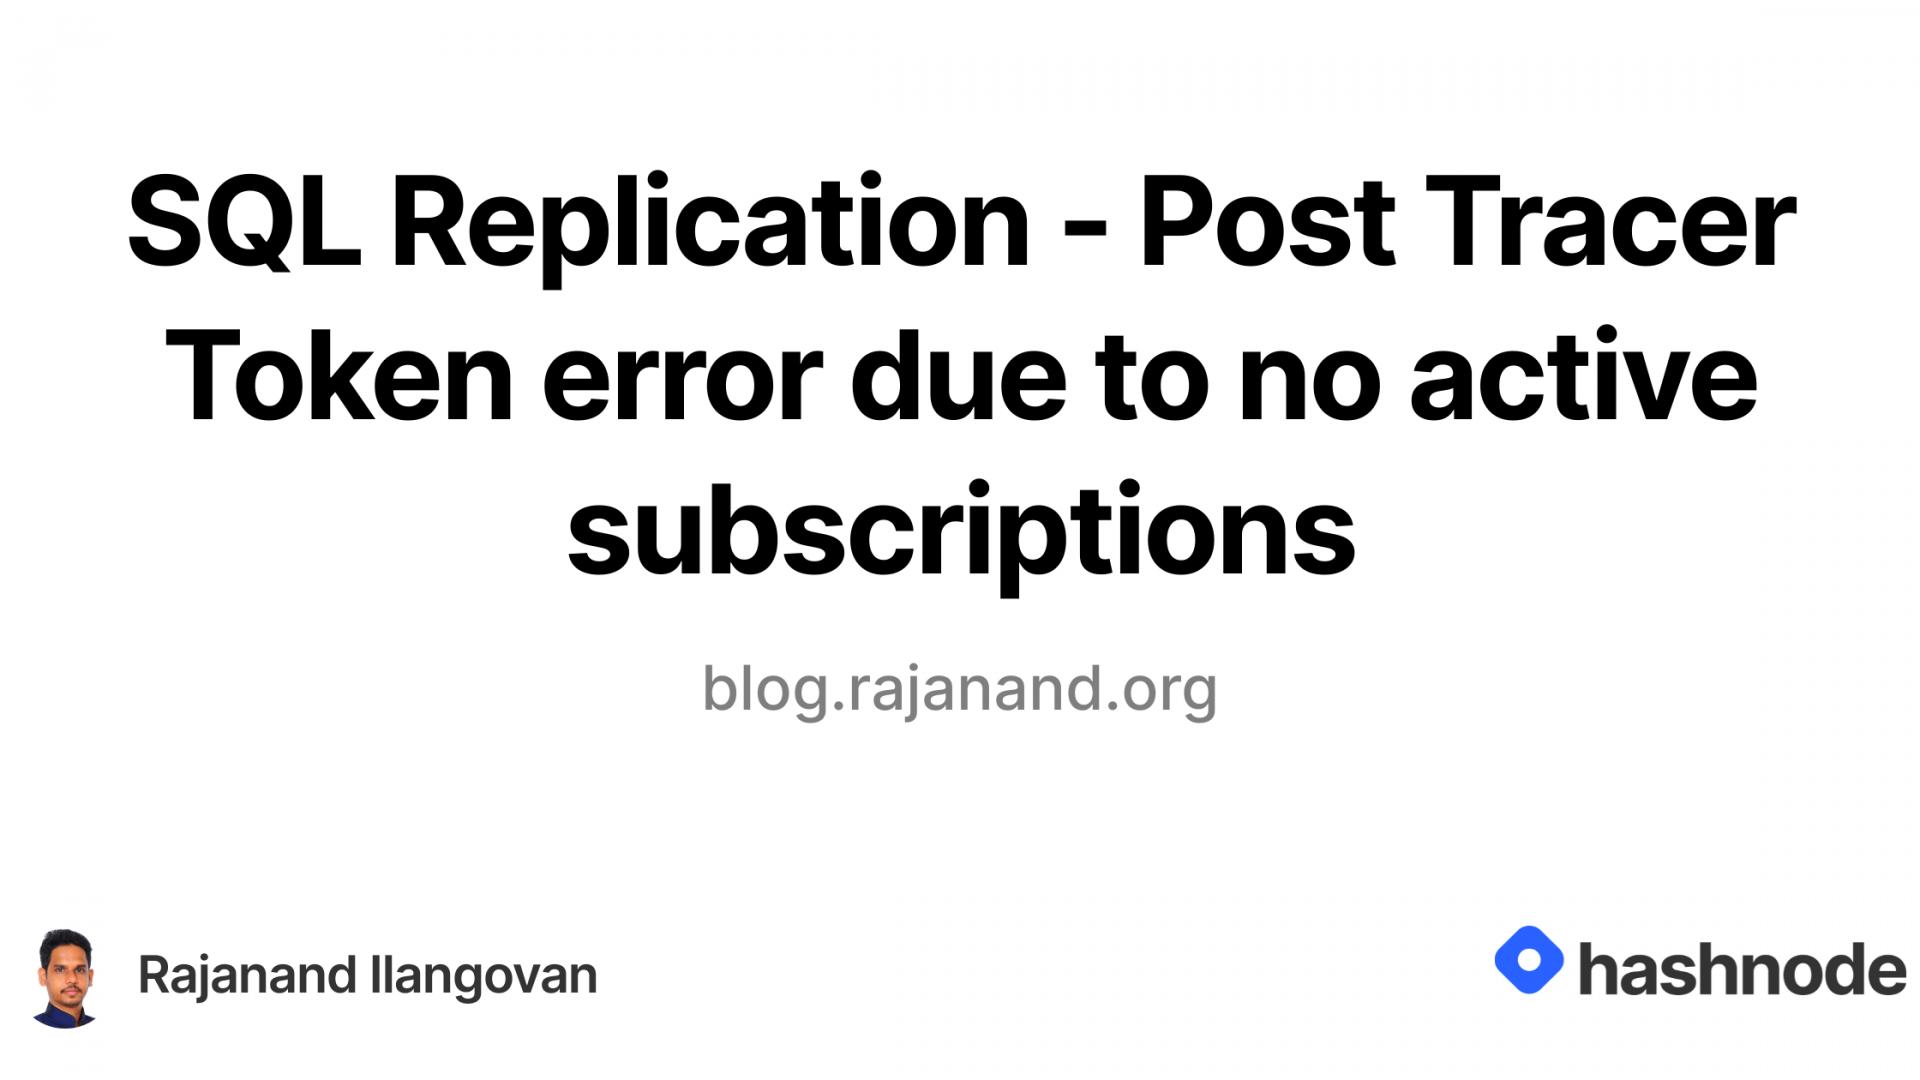 SQL Replication - Post Tracer Token error due to no active subscriptions